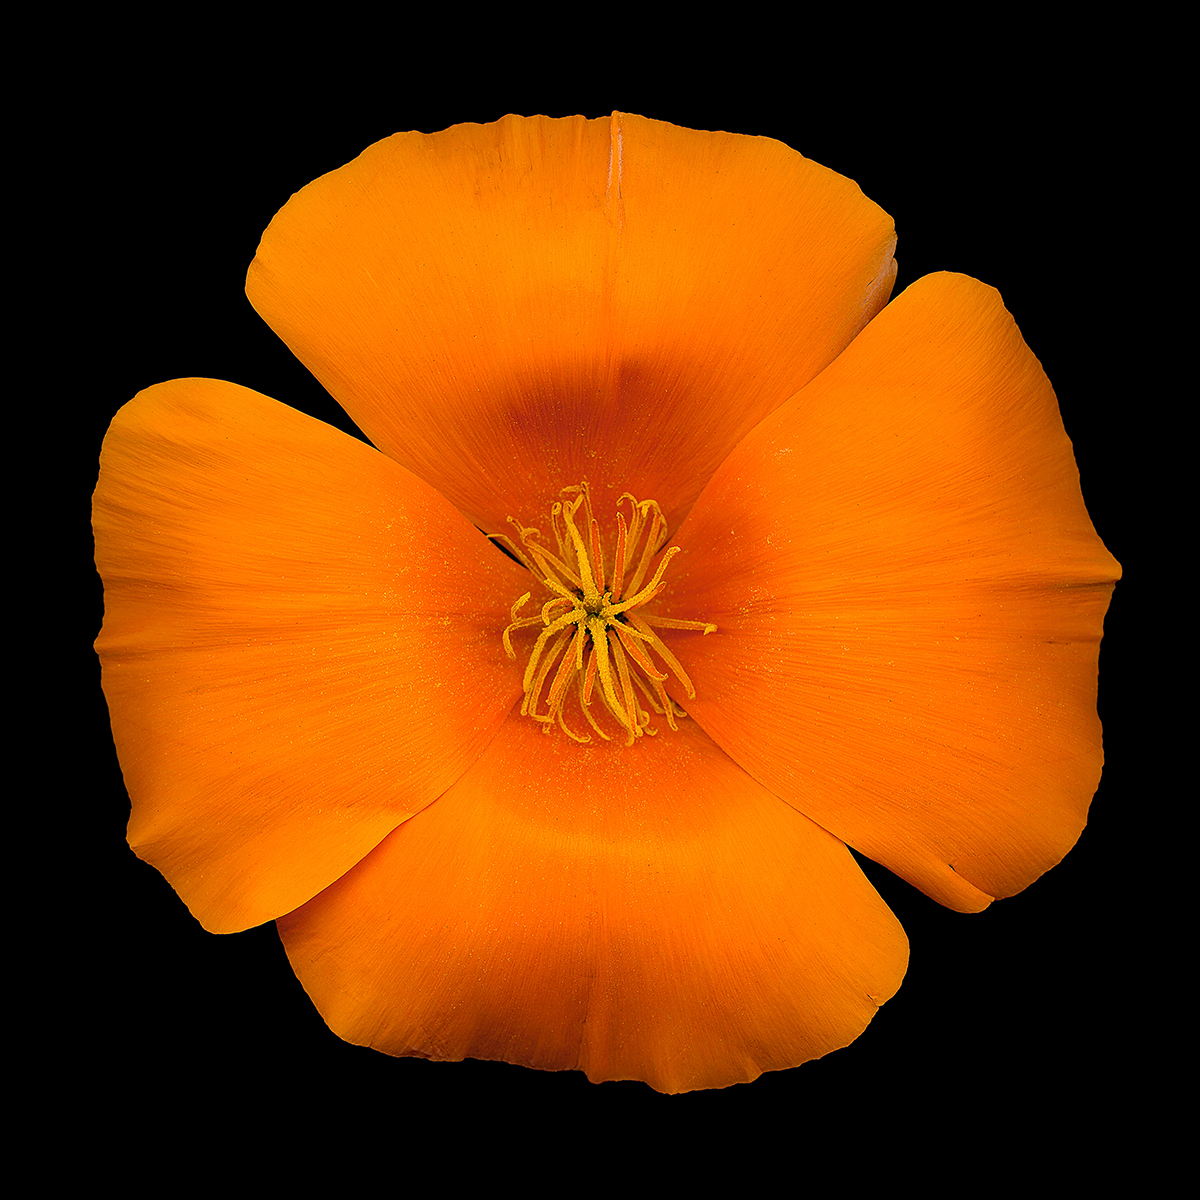 California Poppy by David Leaser